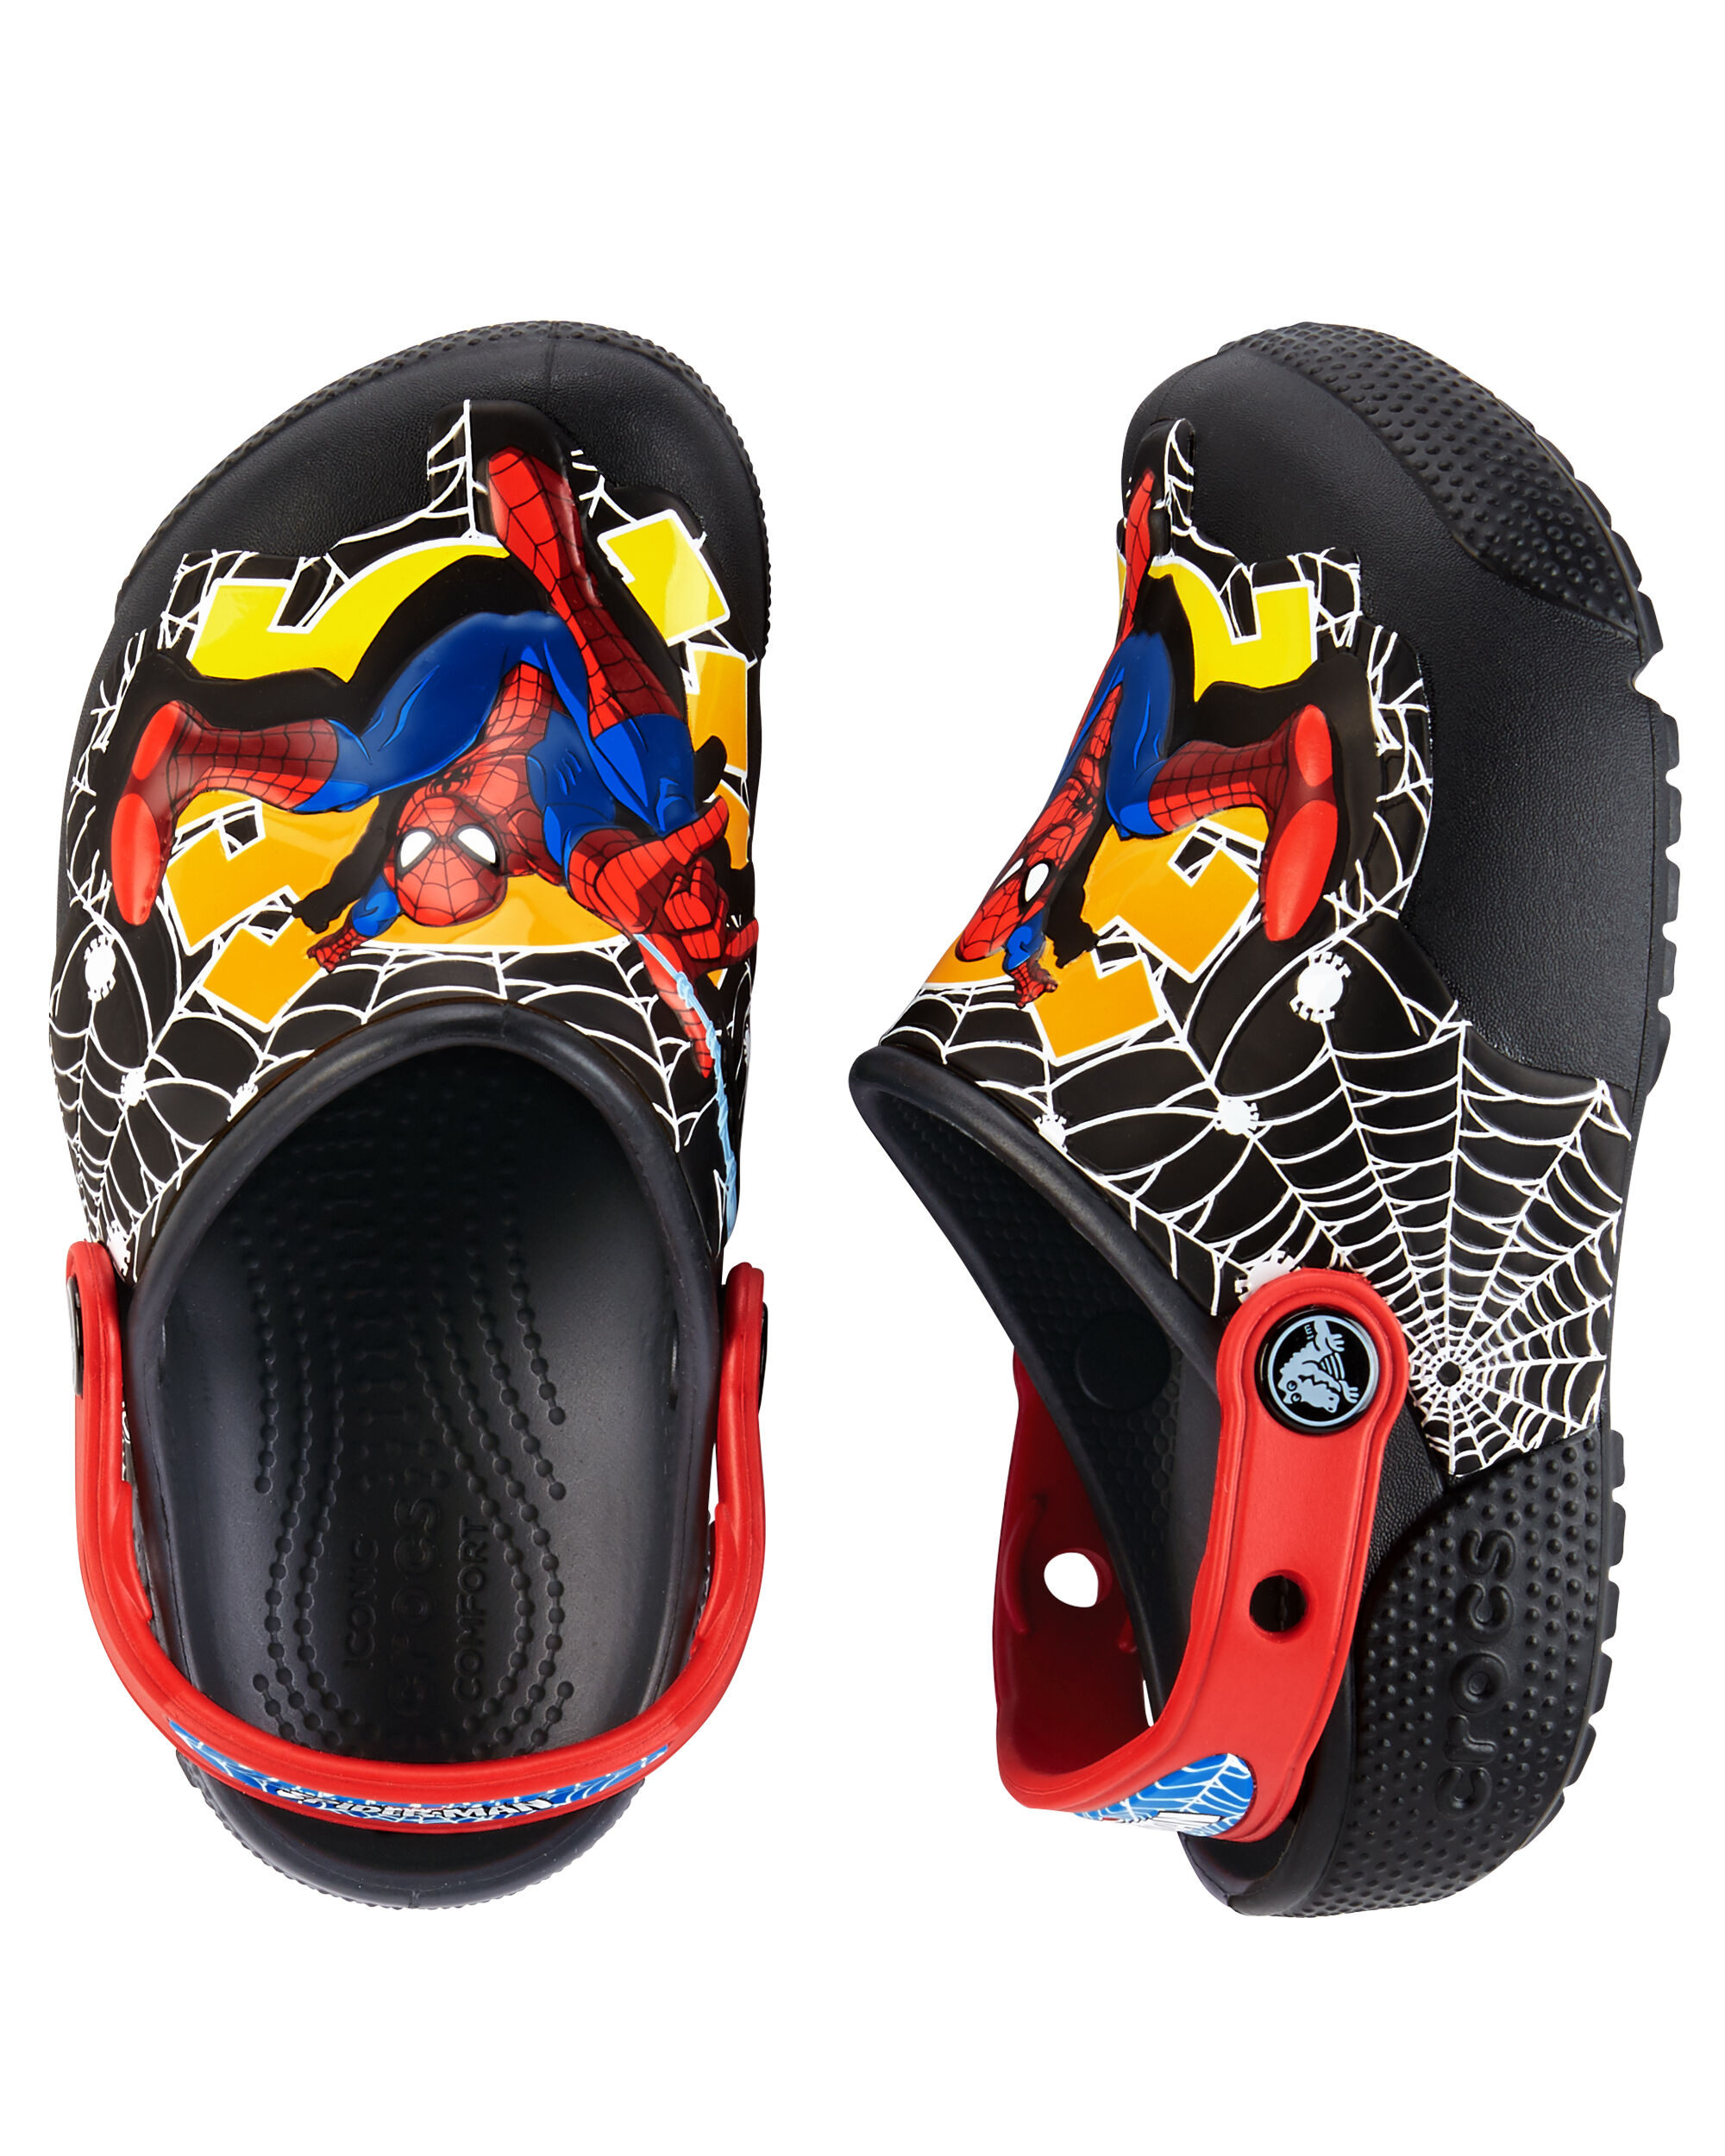 spiderman crocs size 9